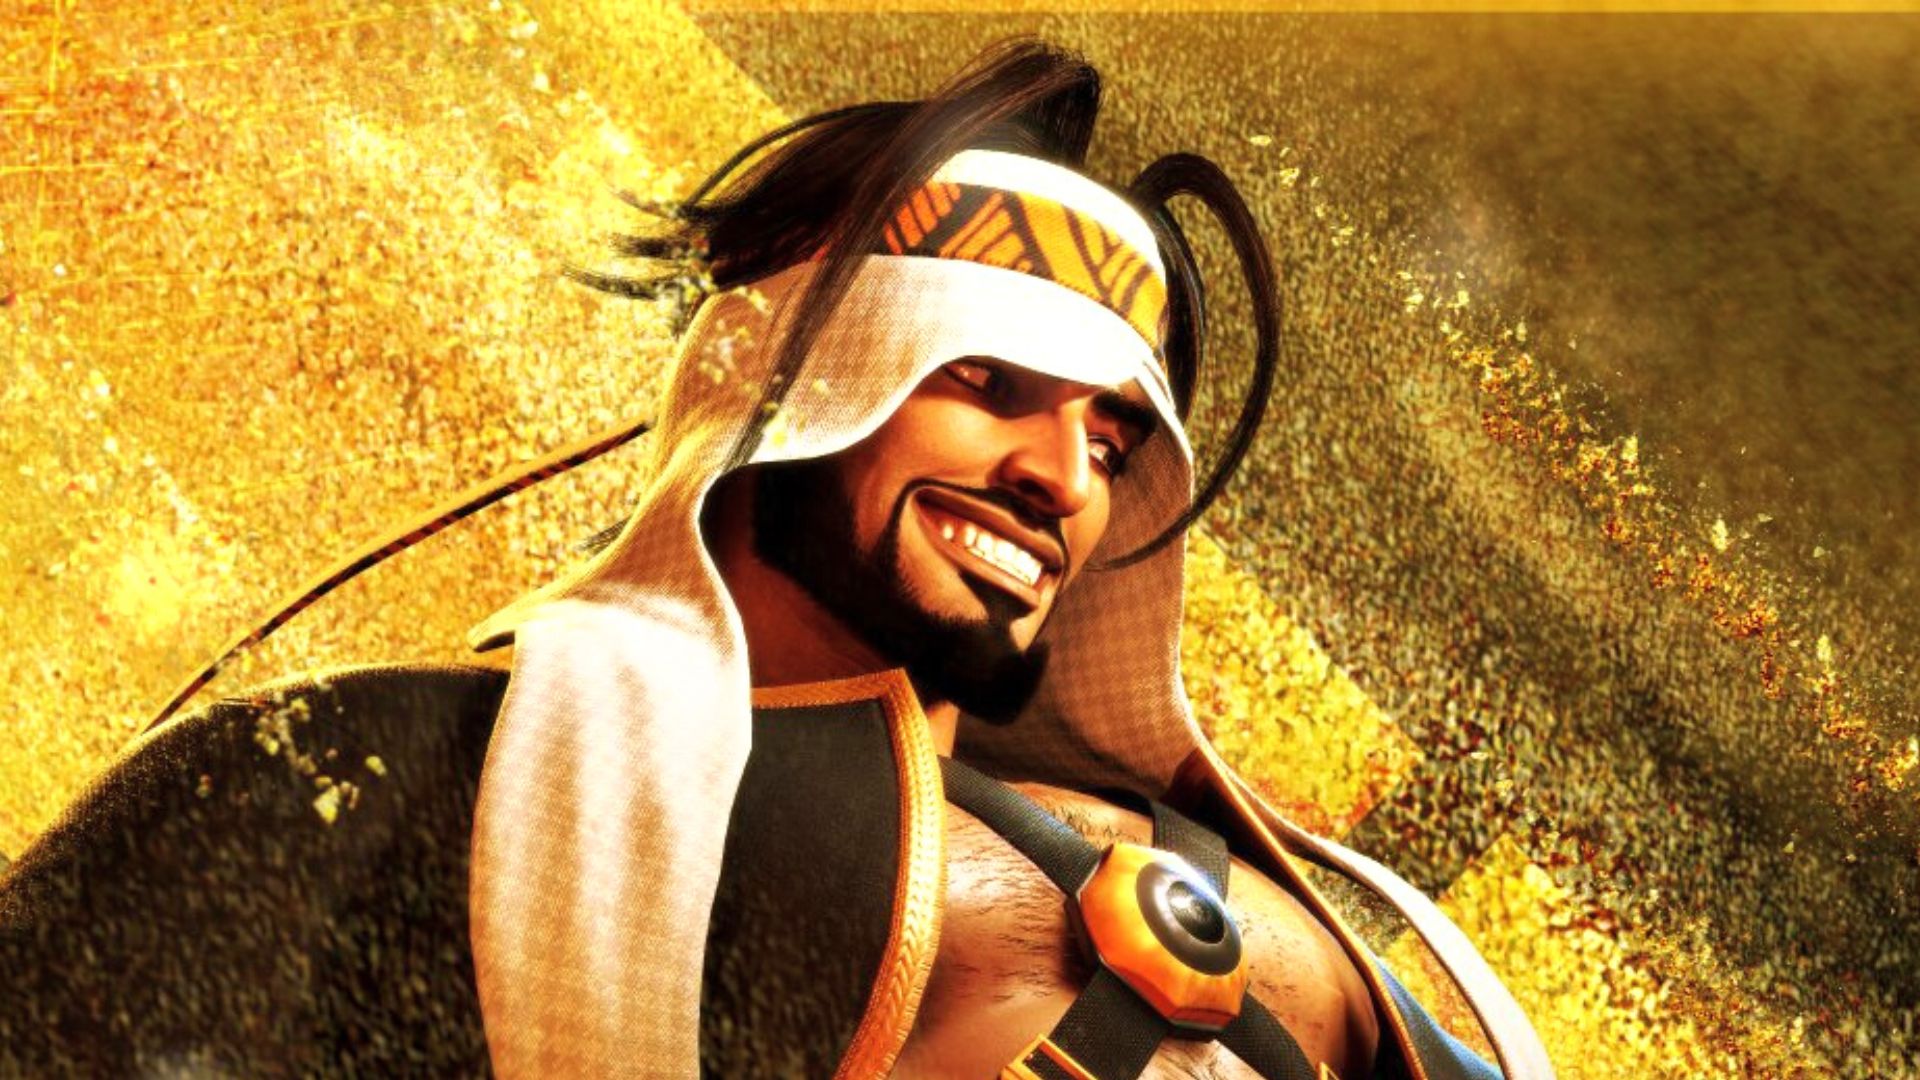 Rashid soars into Street Fighter 6 on July 24 – PlayStation.Blog